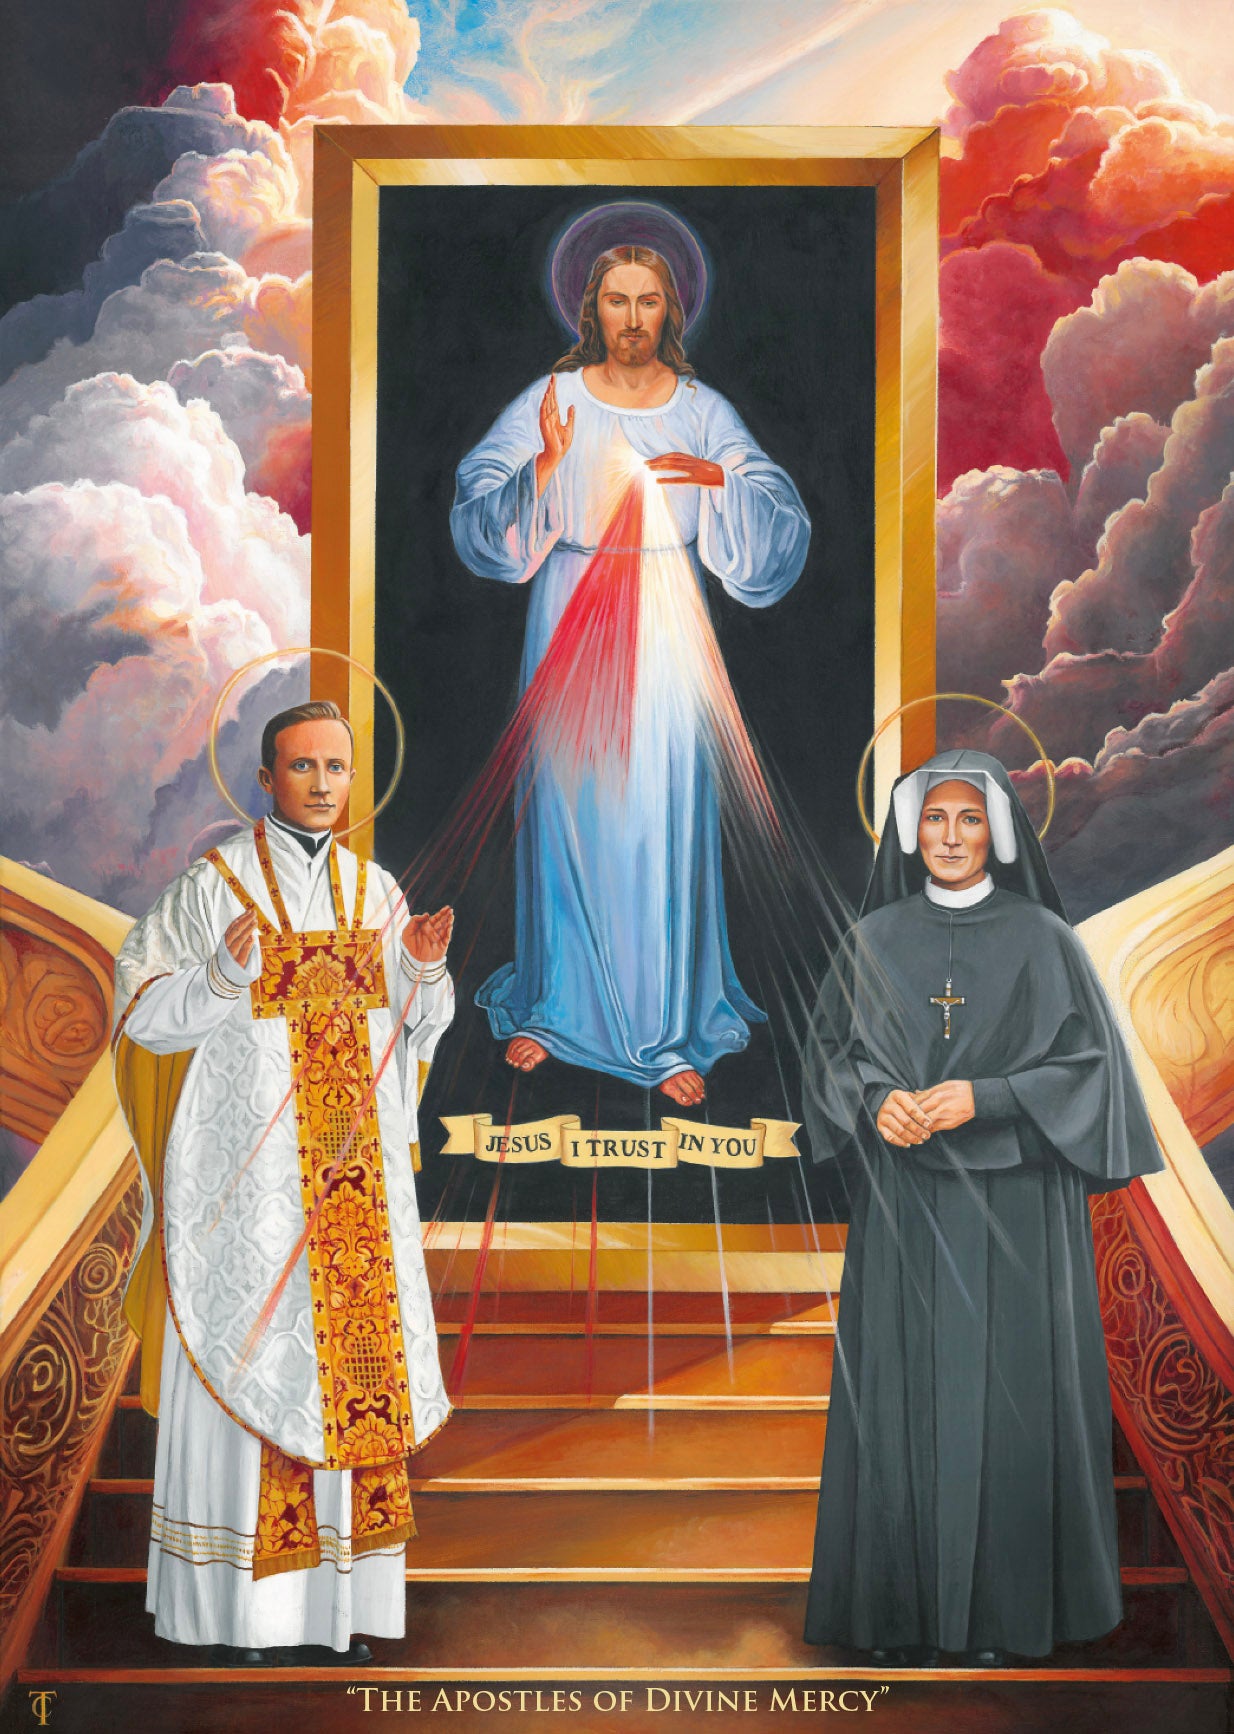 The Apostles of Divine Mercy